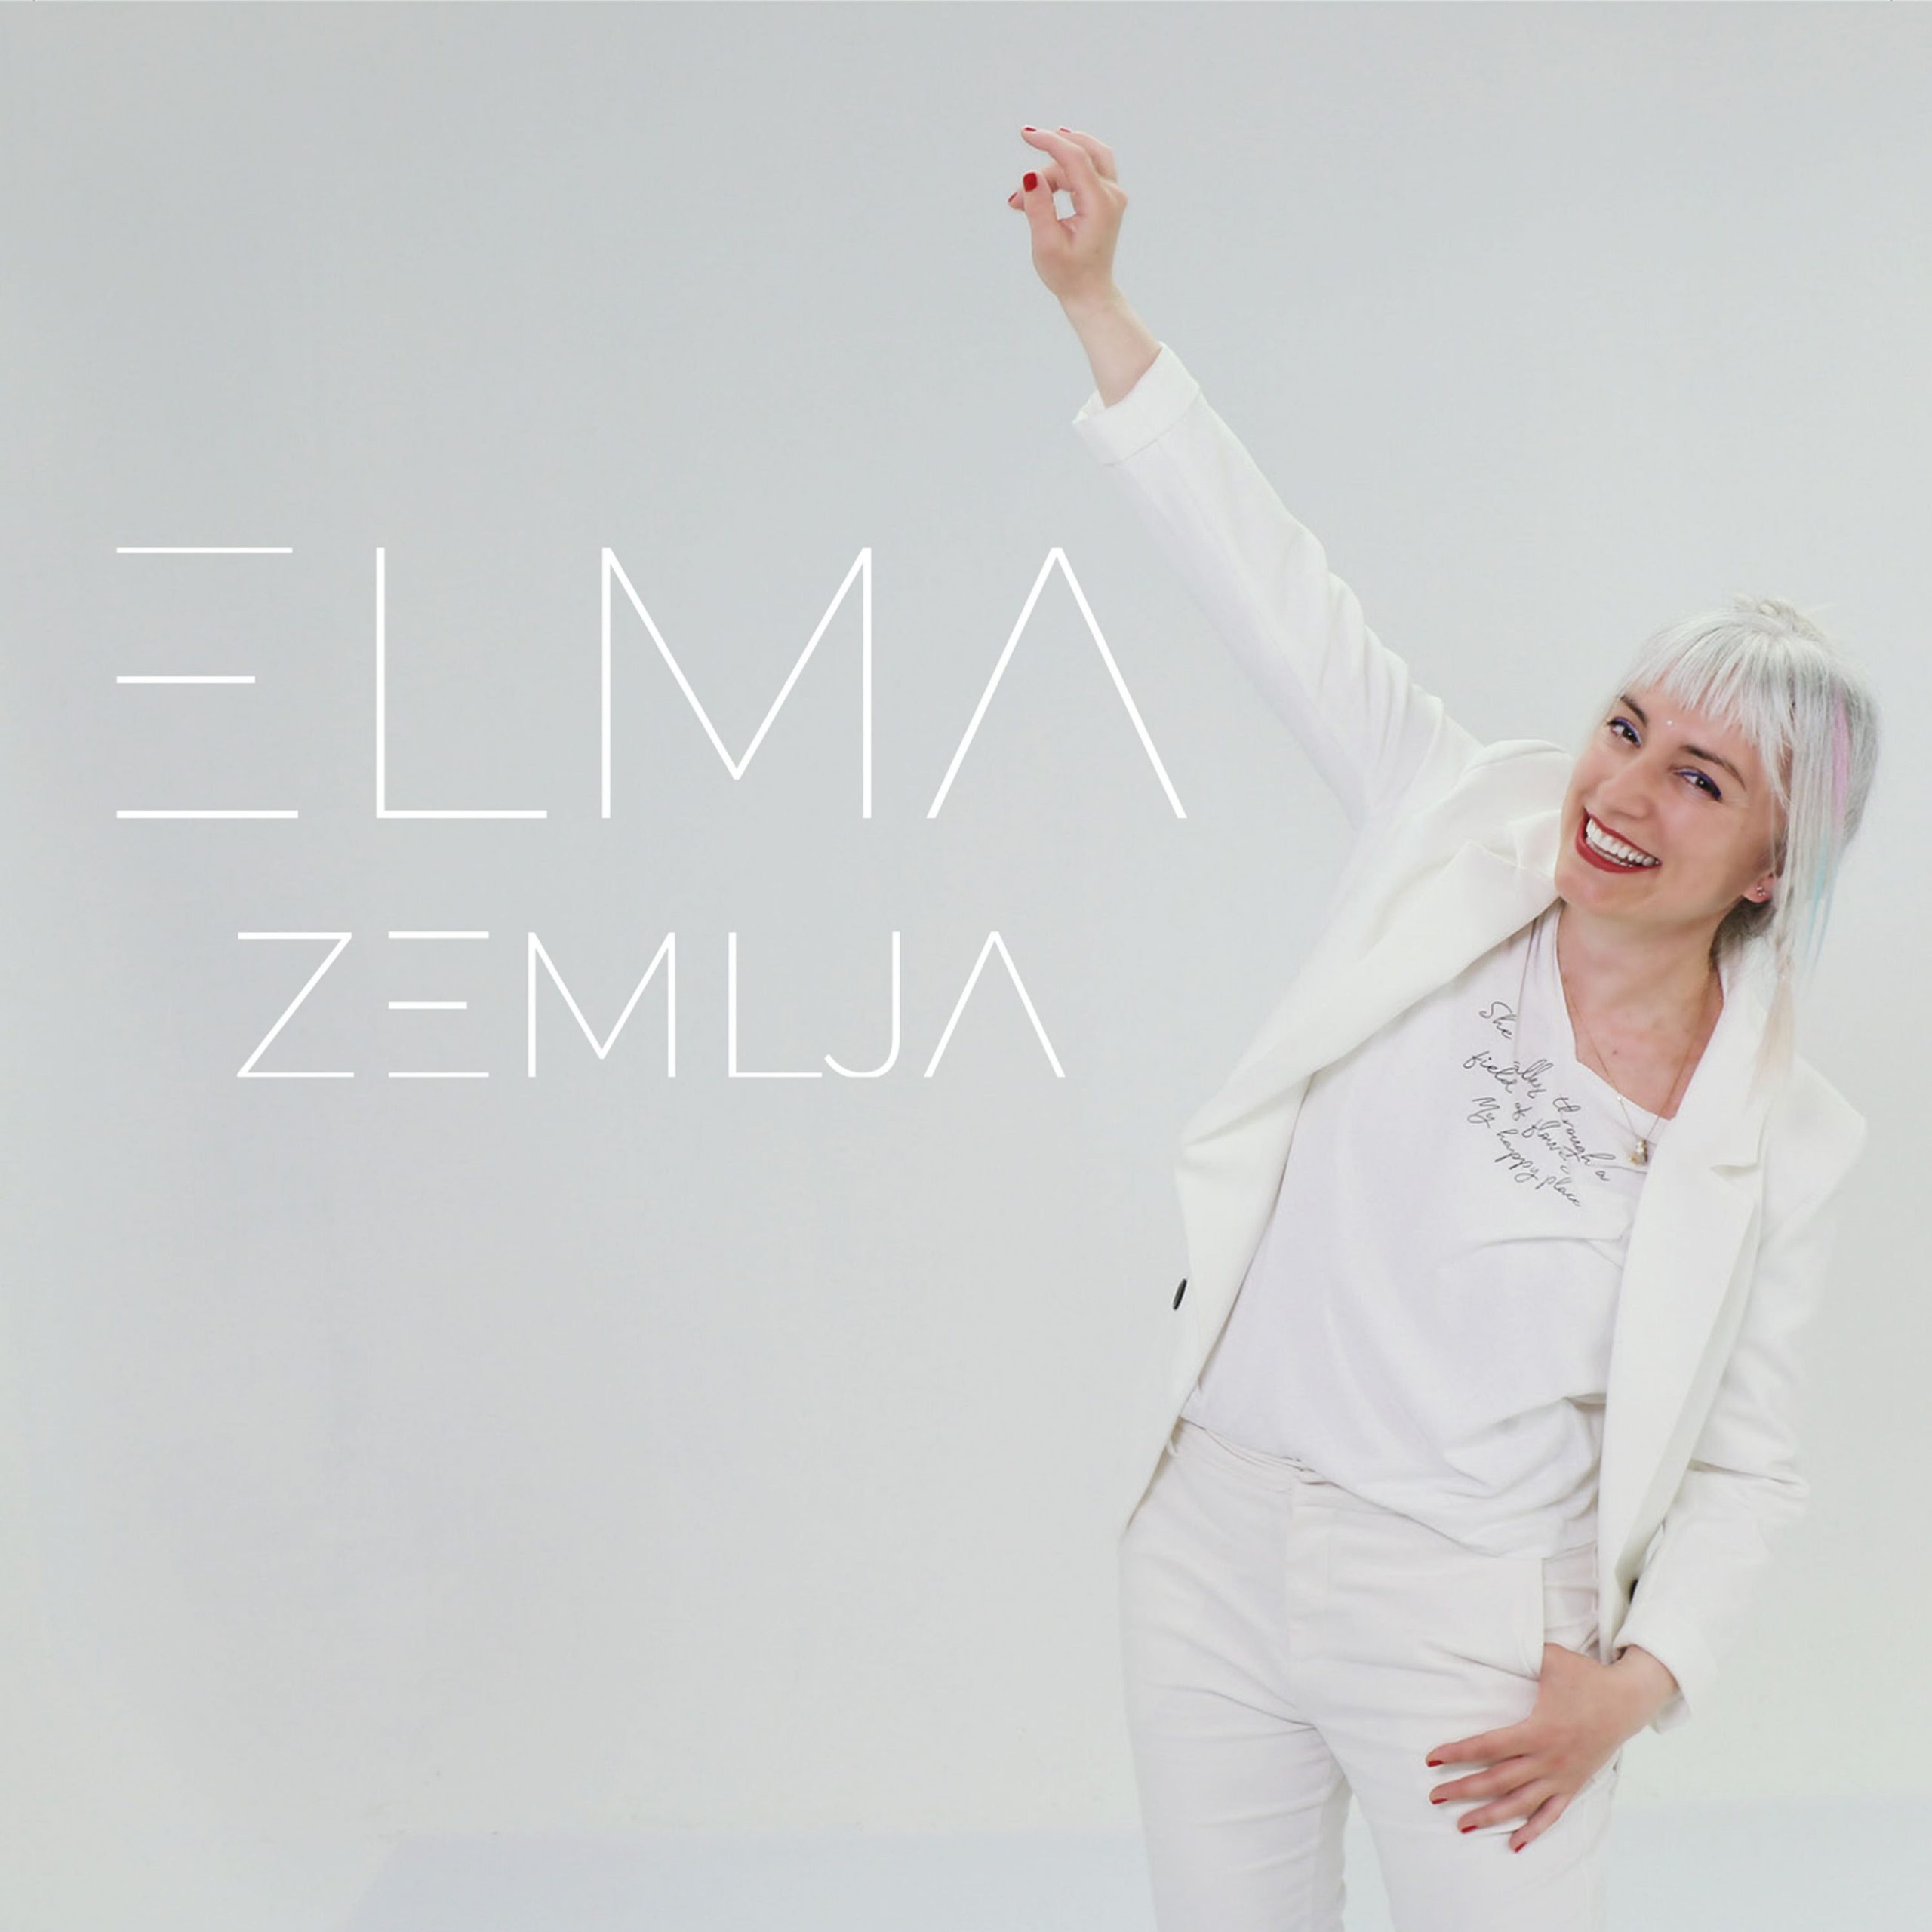 Kantautorica Elma objavila spot za naslovnu pjesmu s albuma “Zemlja”